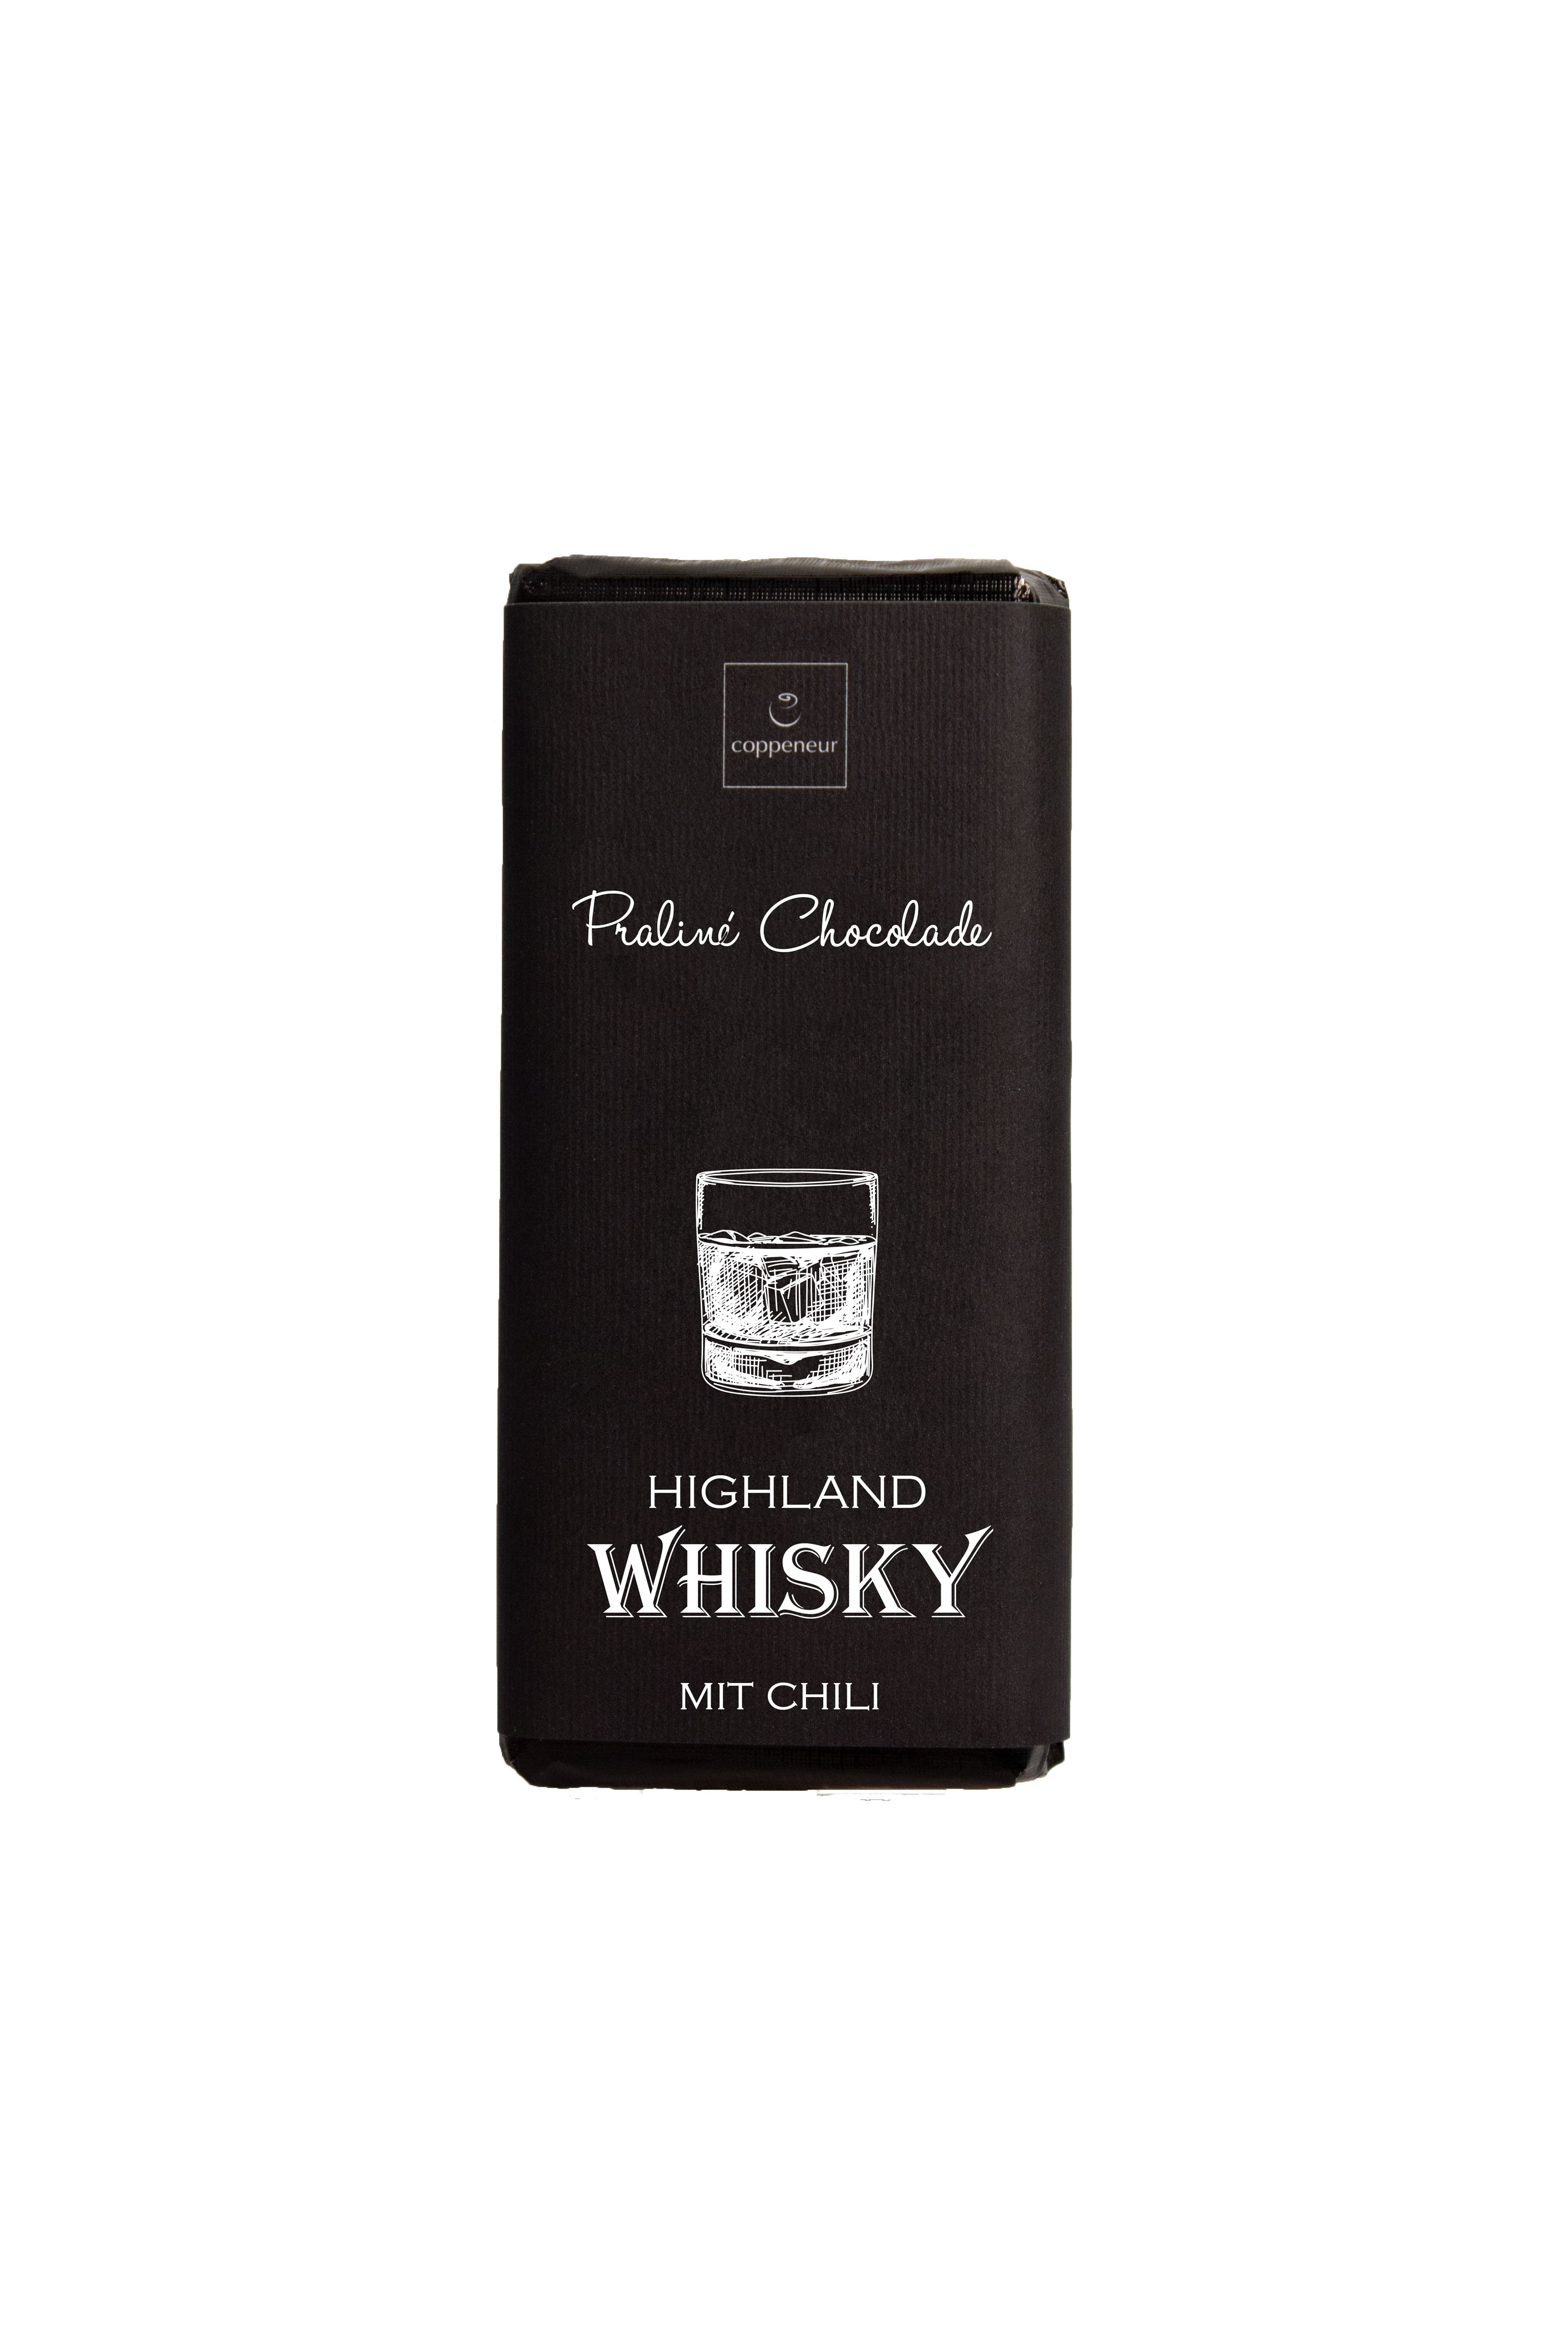 Coppeneur - Highland Whisky mit Chili Praliné Chocolade á 75g